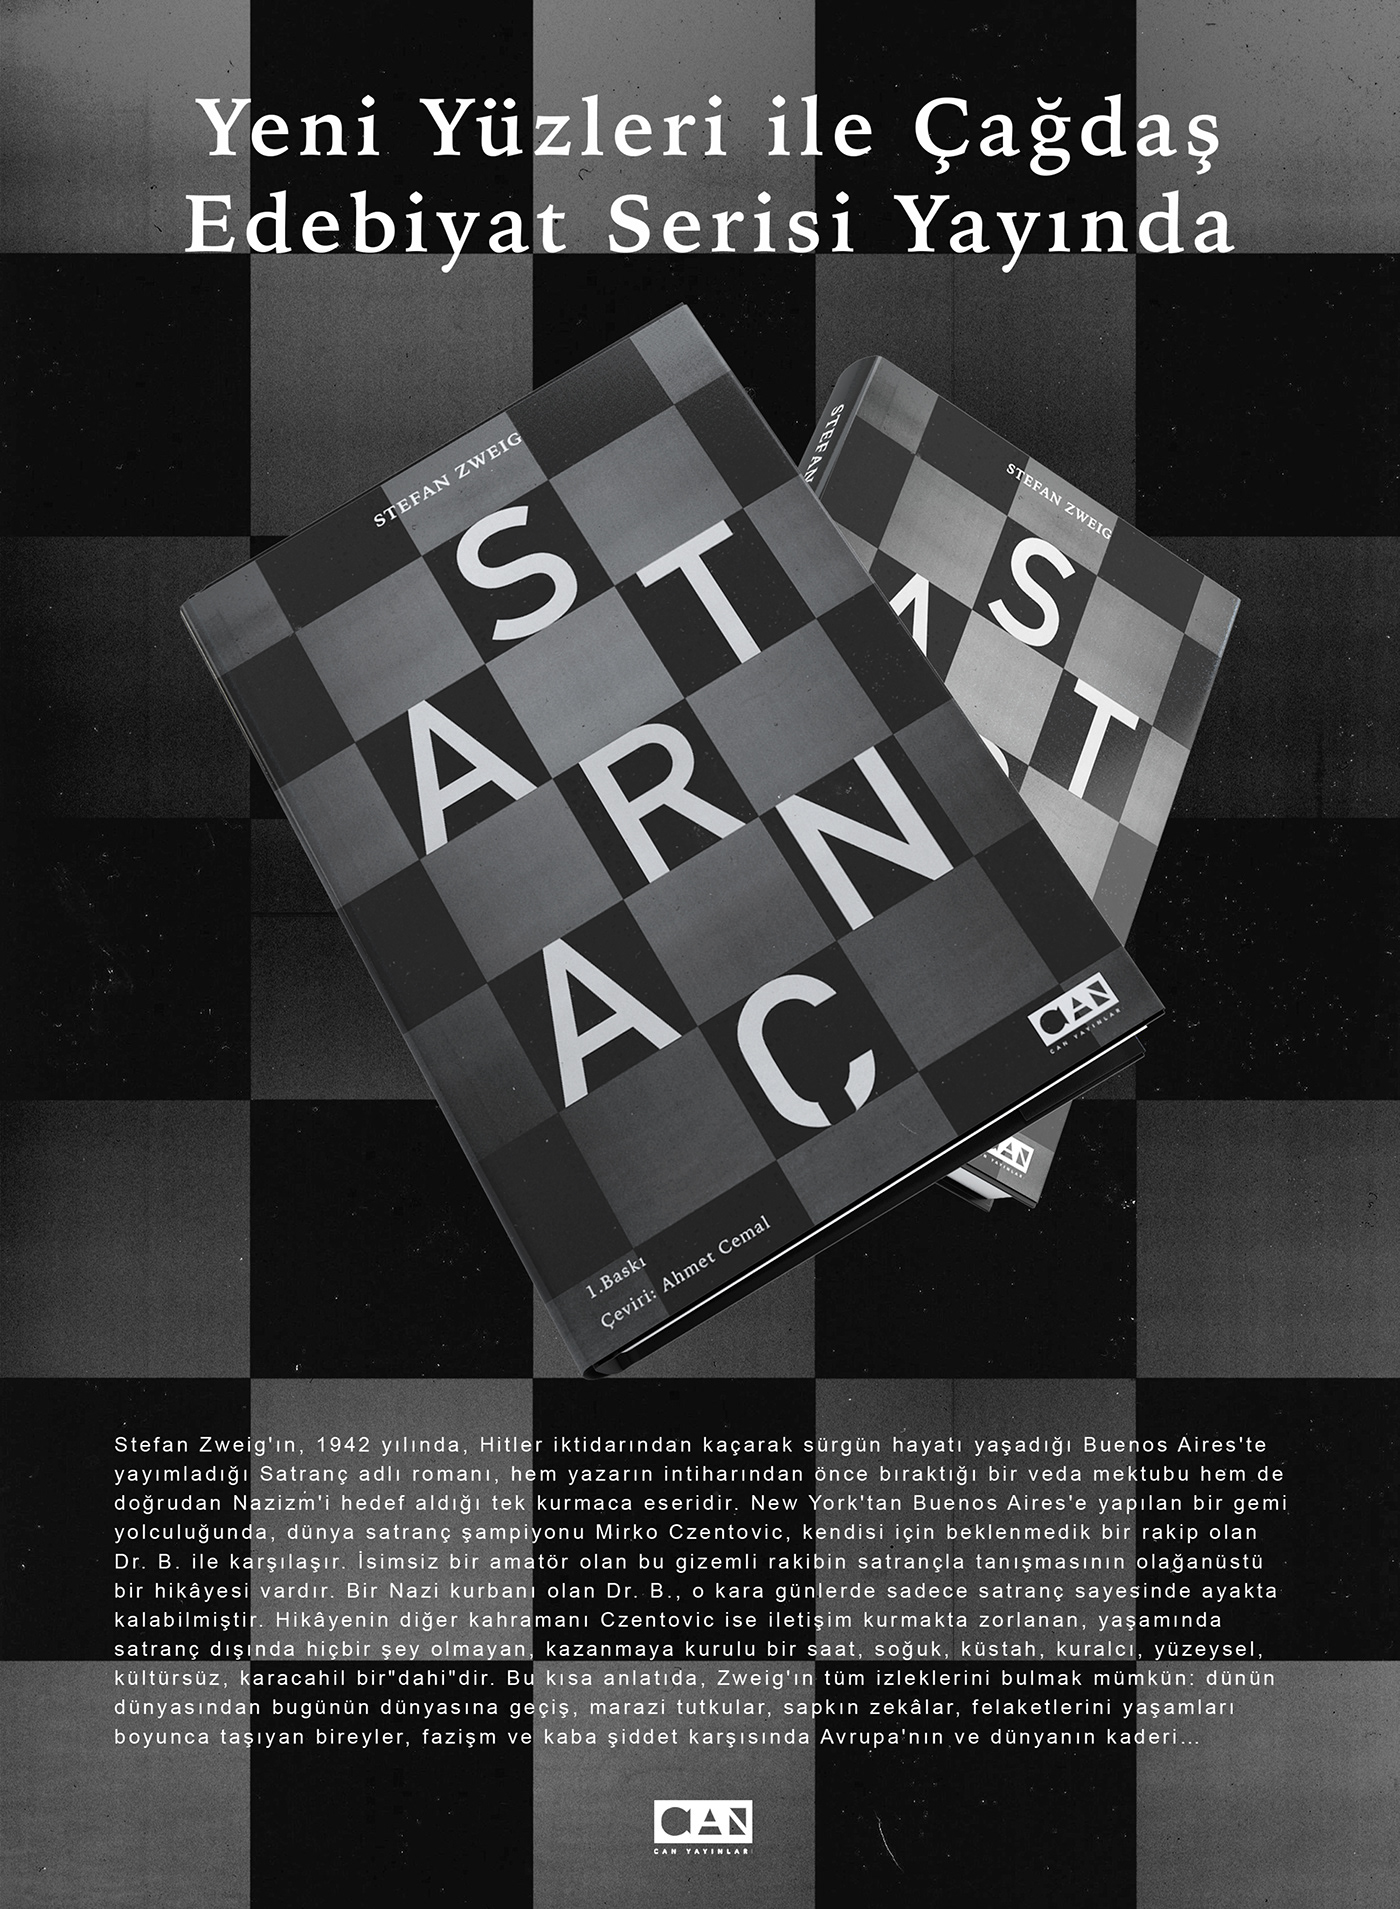 chess book cover design Graphic Designer stefanzweig